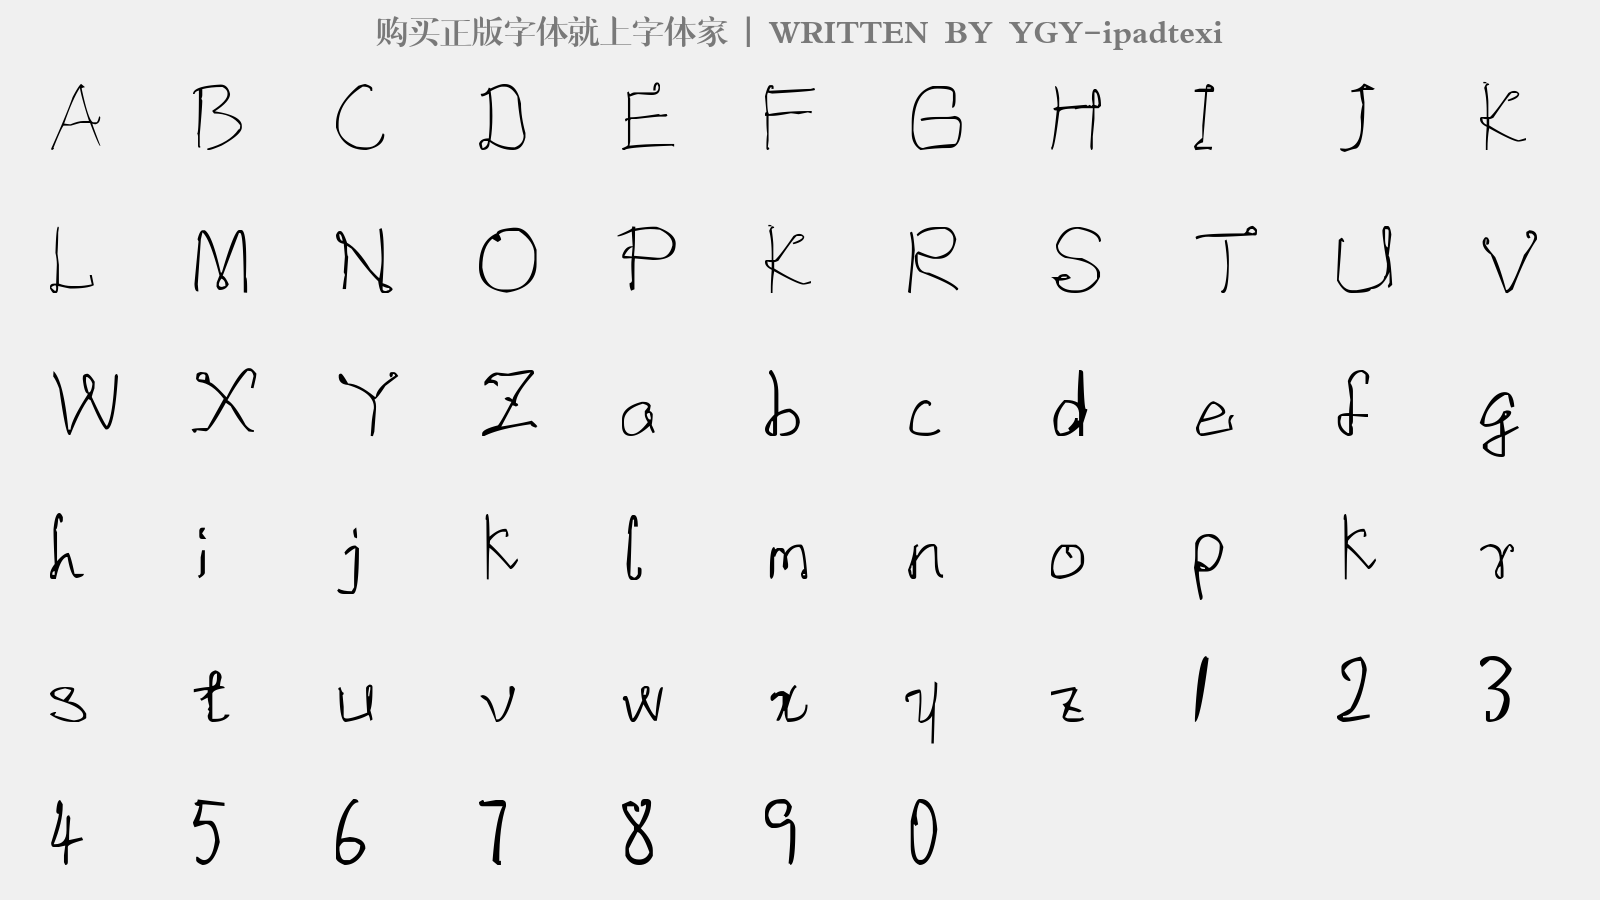 YGY-ipadtexi - 大写字母/小写字母/数字